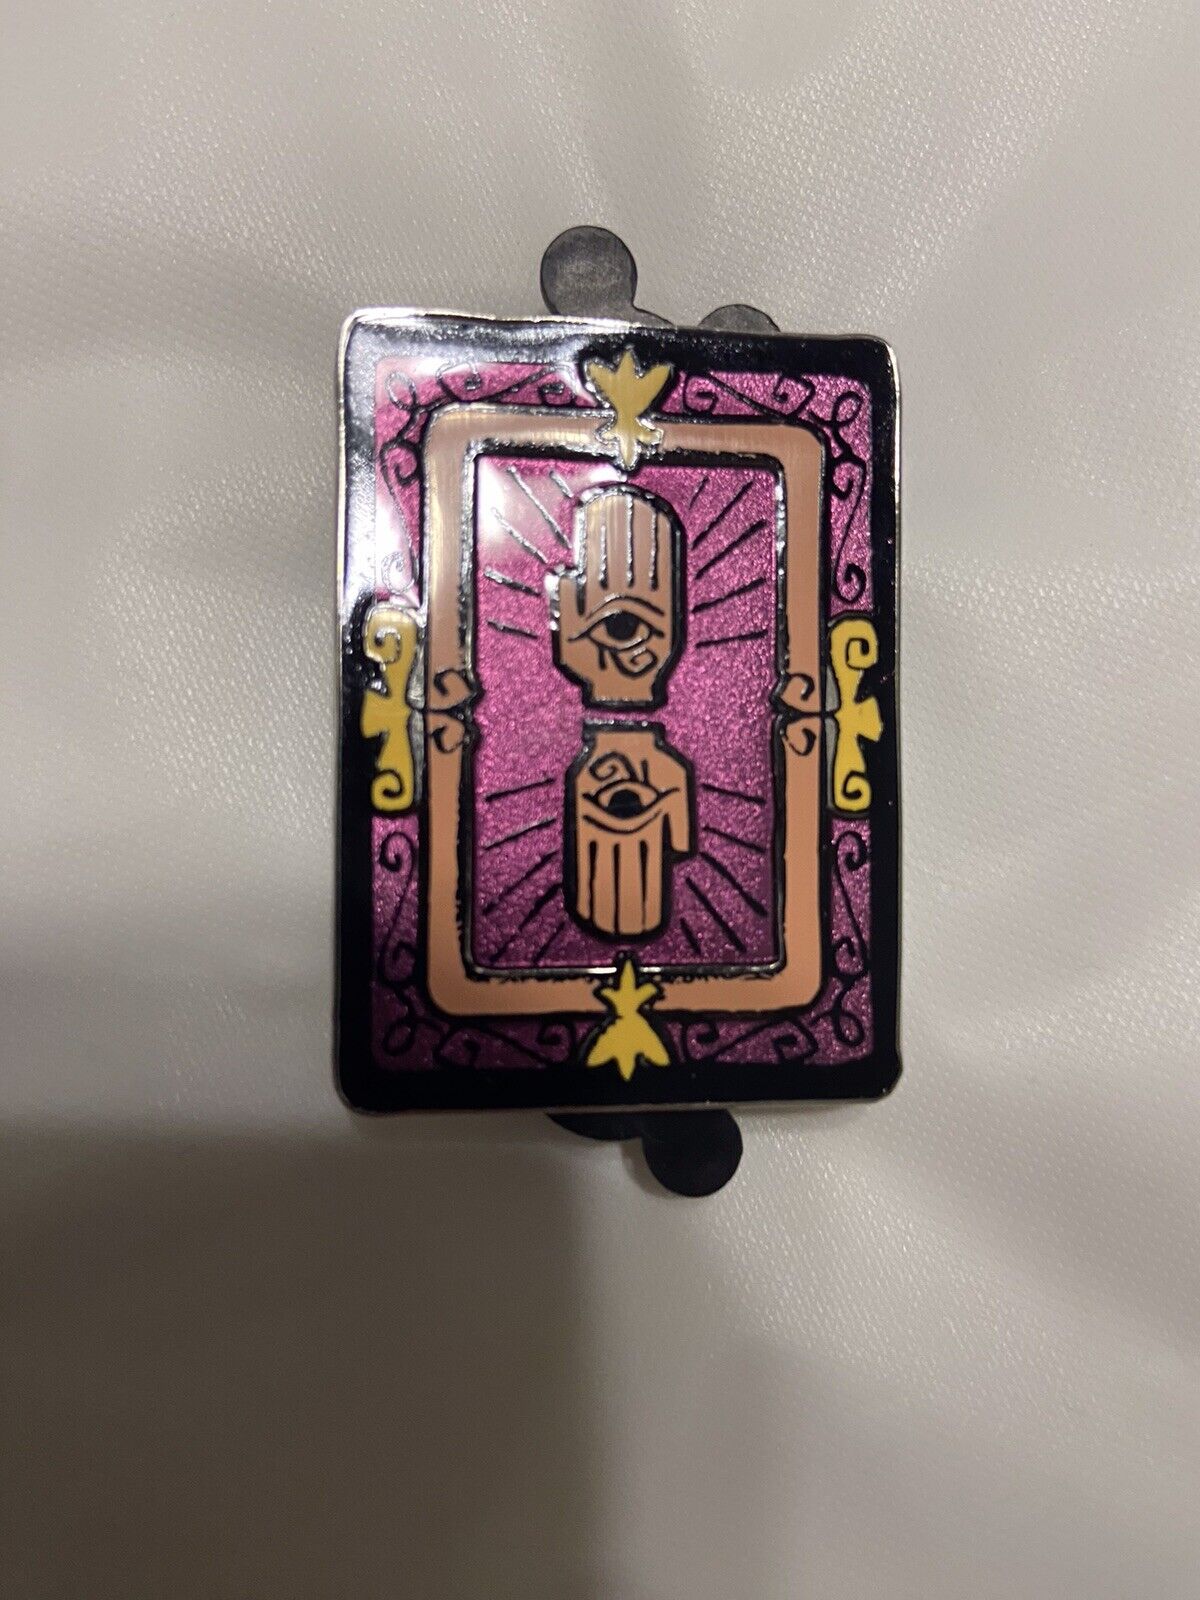 Hocus Pocus Villain Spectacular Mystery Tarot Card Disney Pin Authentic 2021